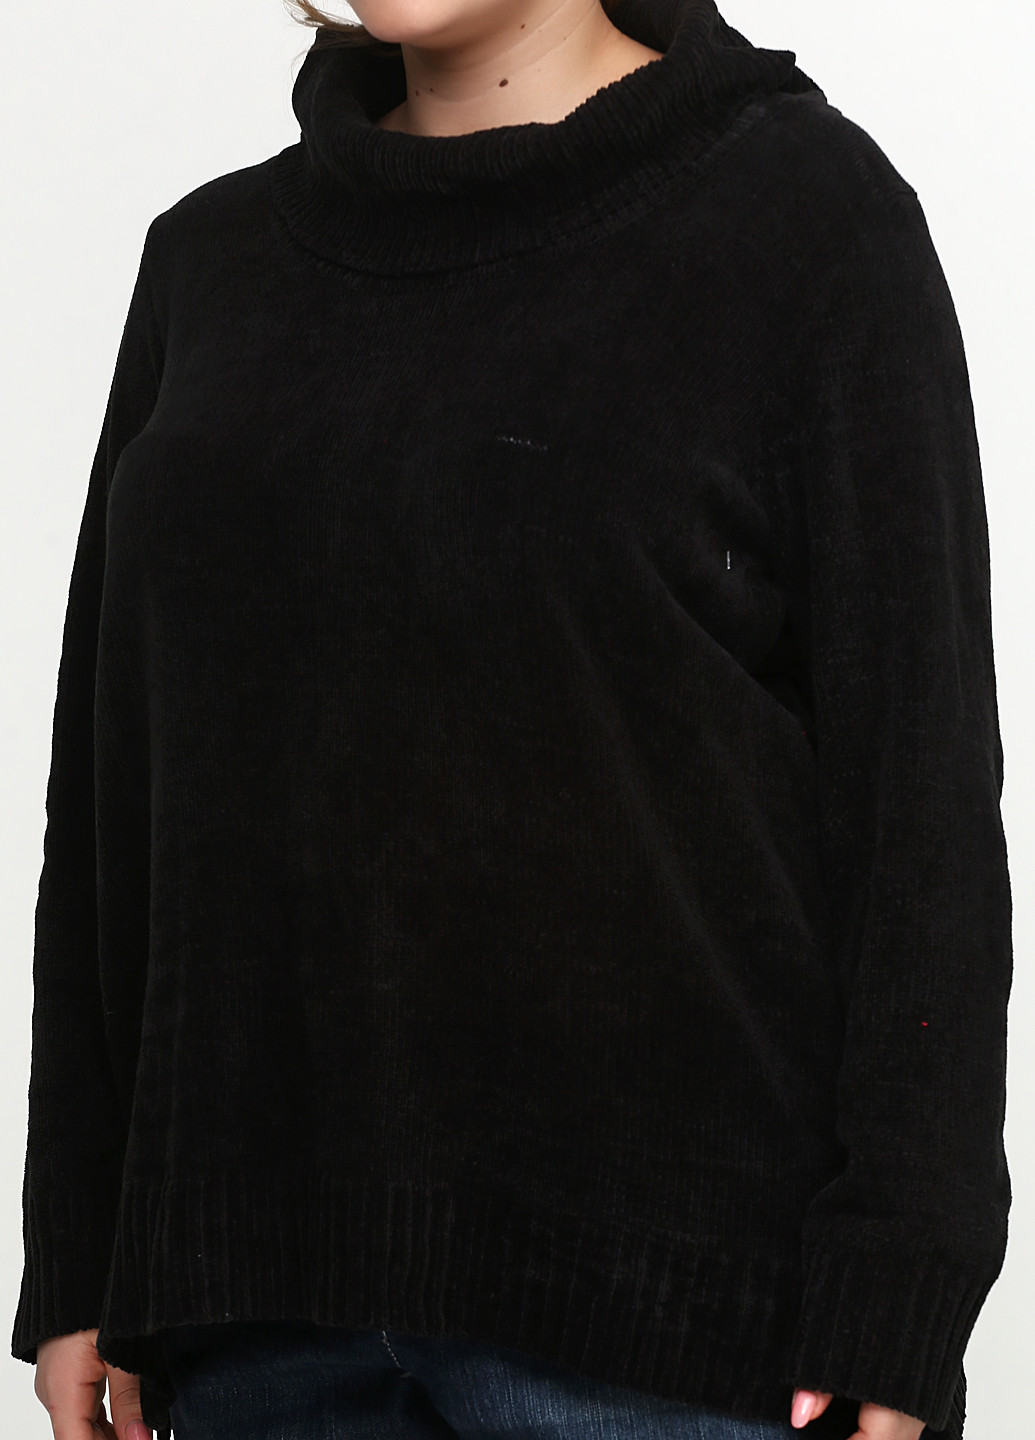 Черный демисезонный свитер хомут White Stag